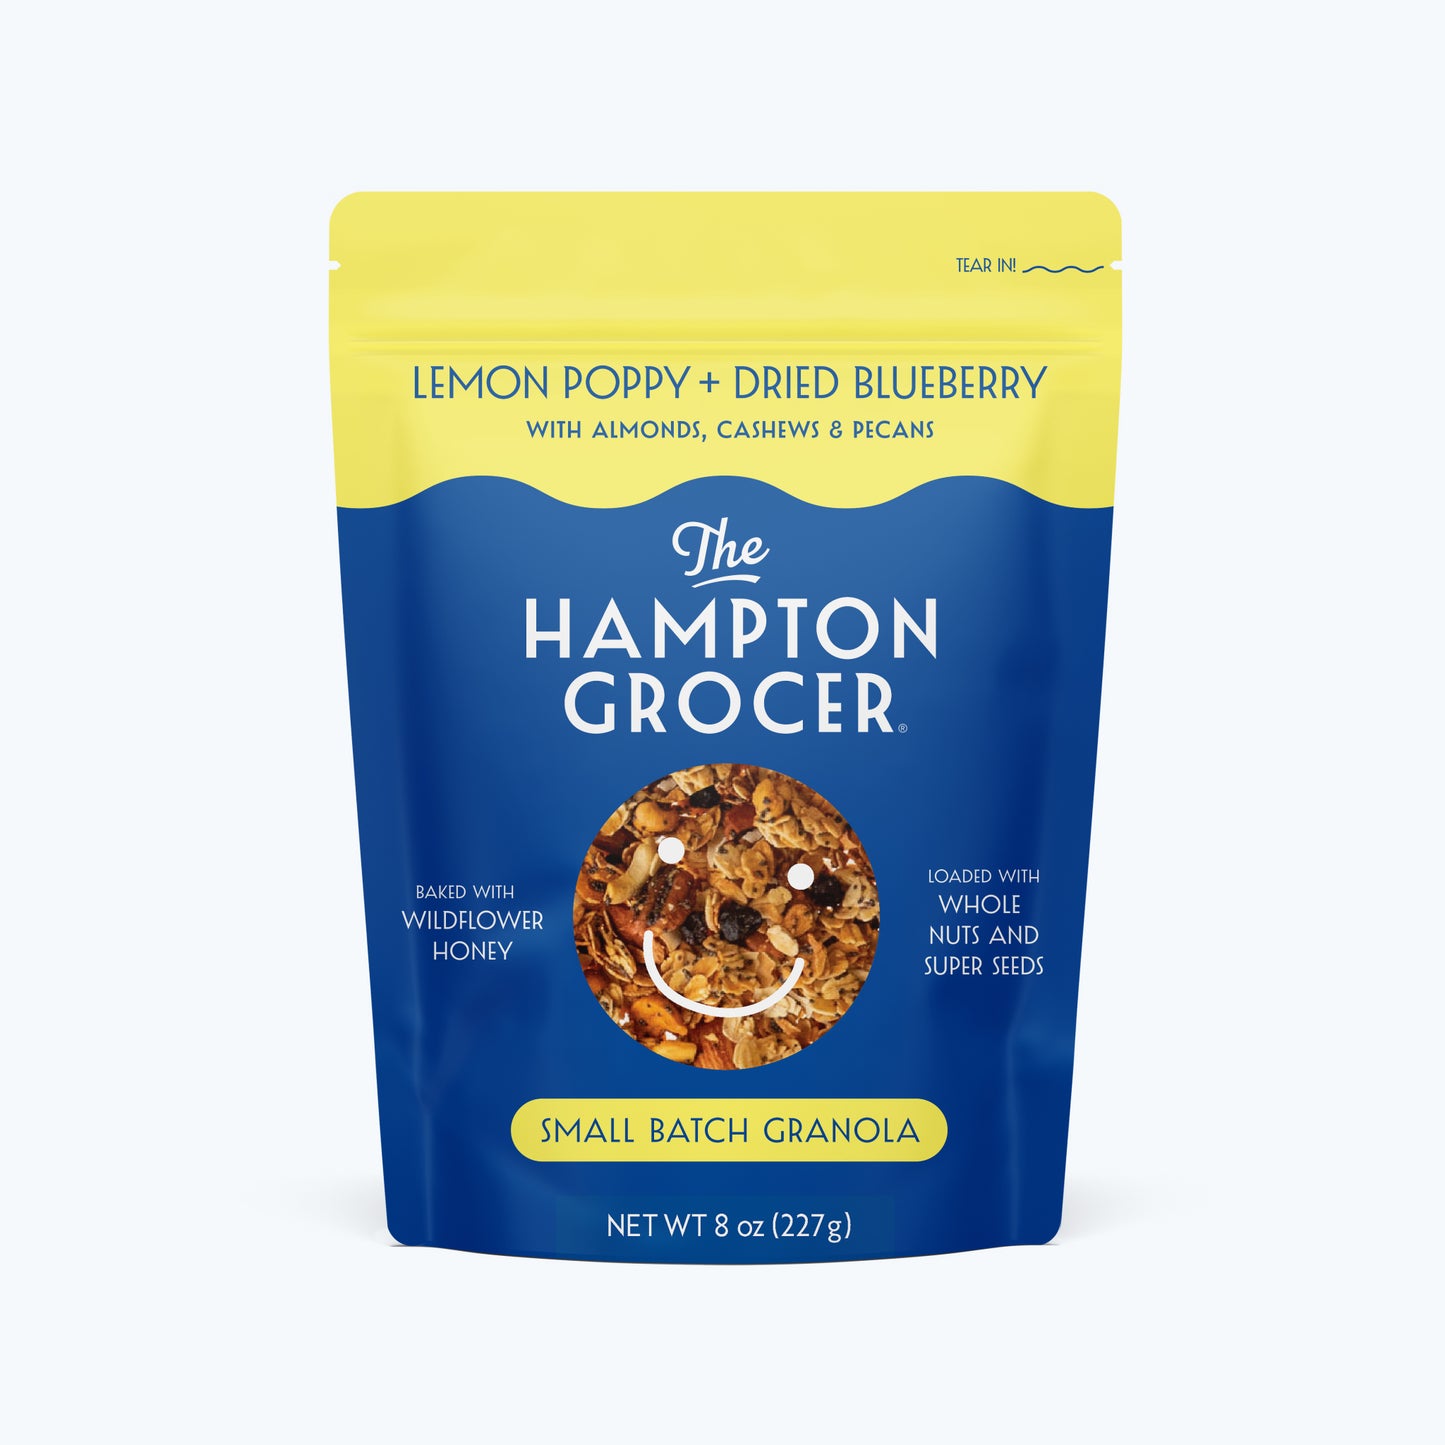 Lemon Poppy + Dried Blueberry Granola Bundle Pack